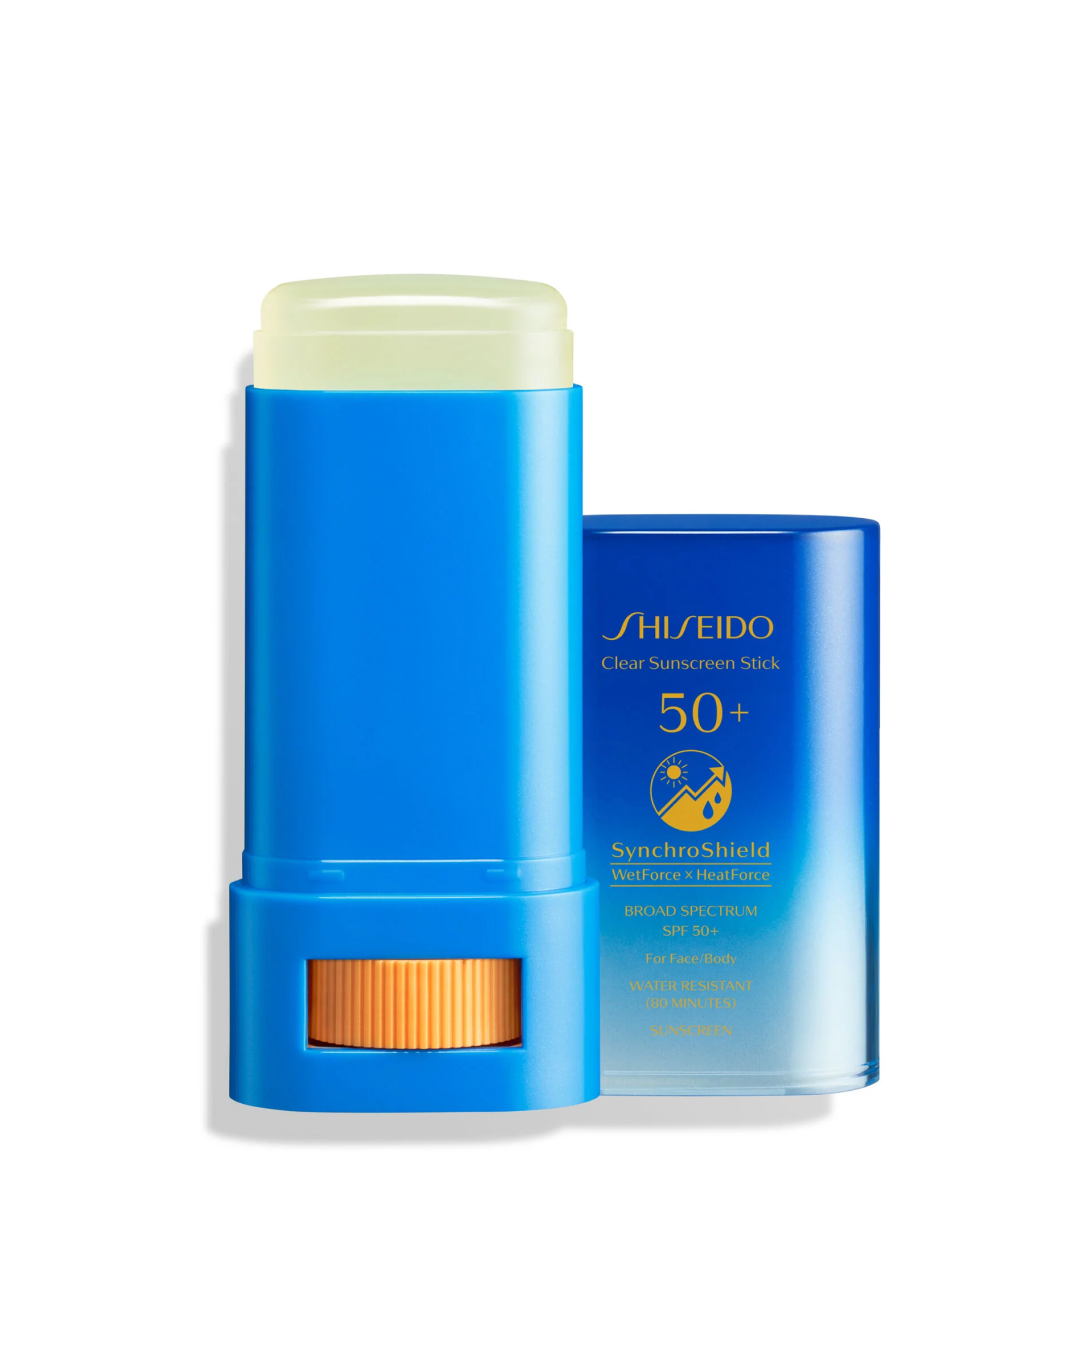 Shiseido Clear Sunscreen Stick SPF 50+ (20g) - Best Buy World Philippines